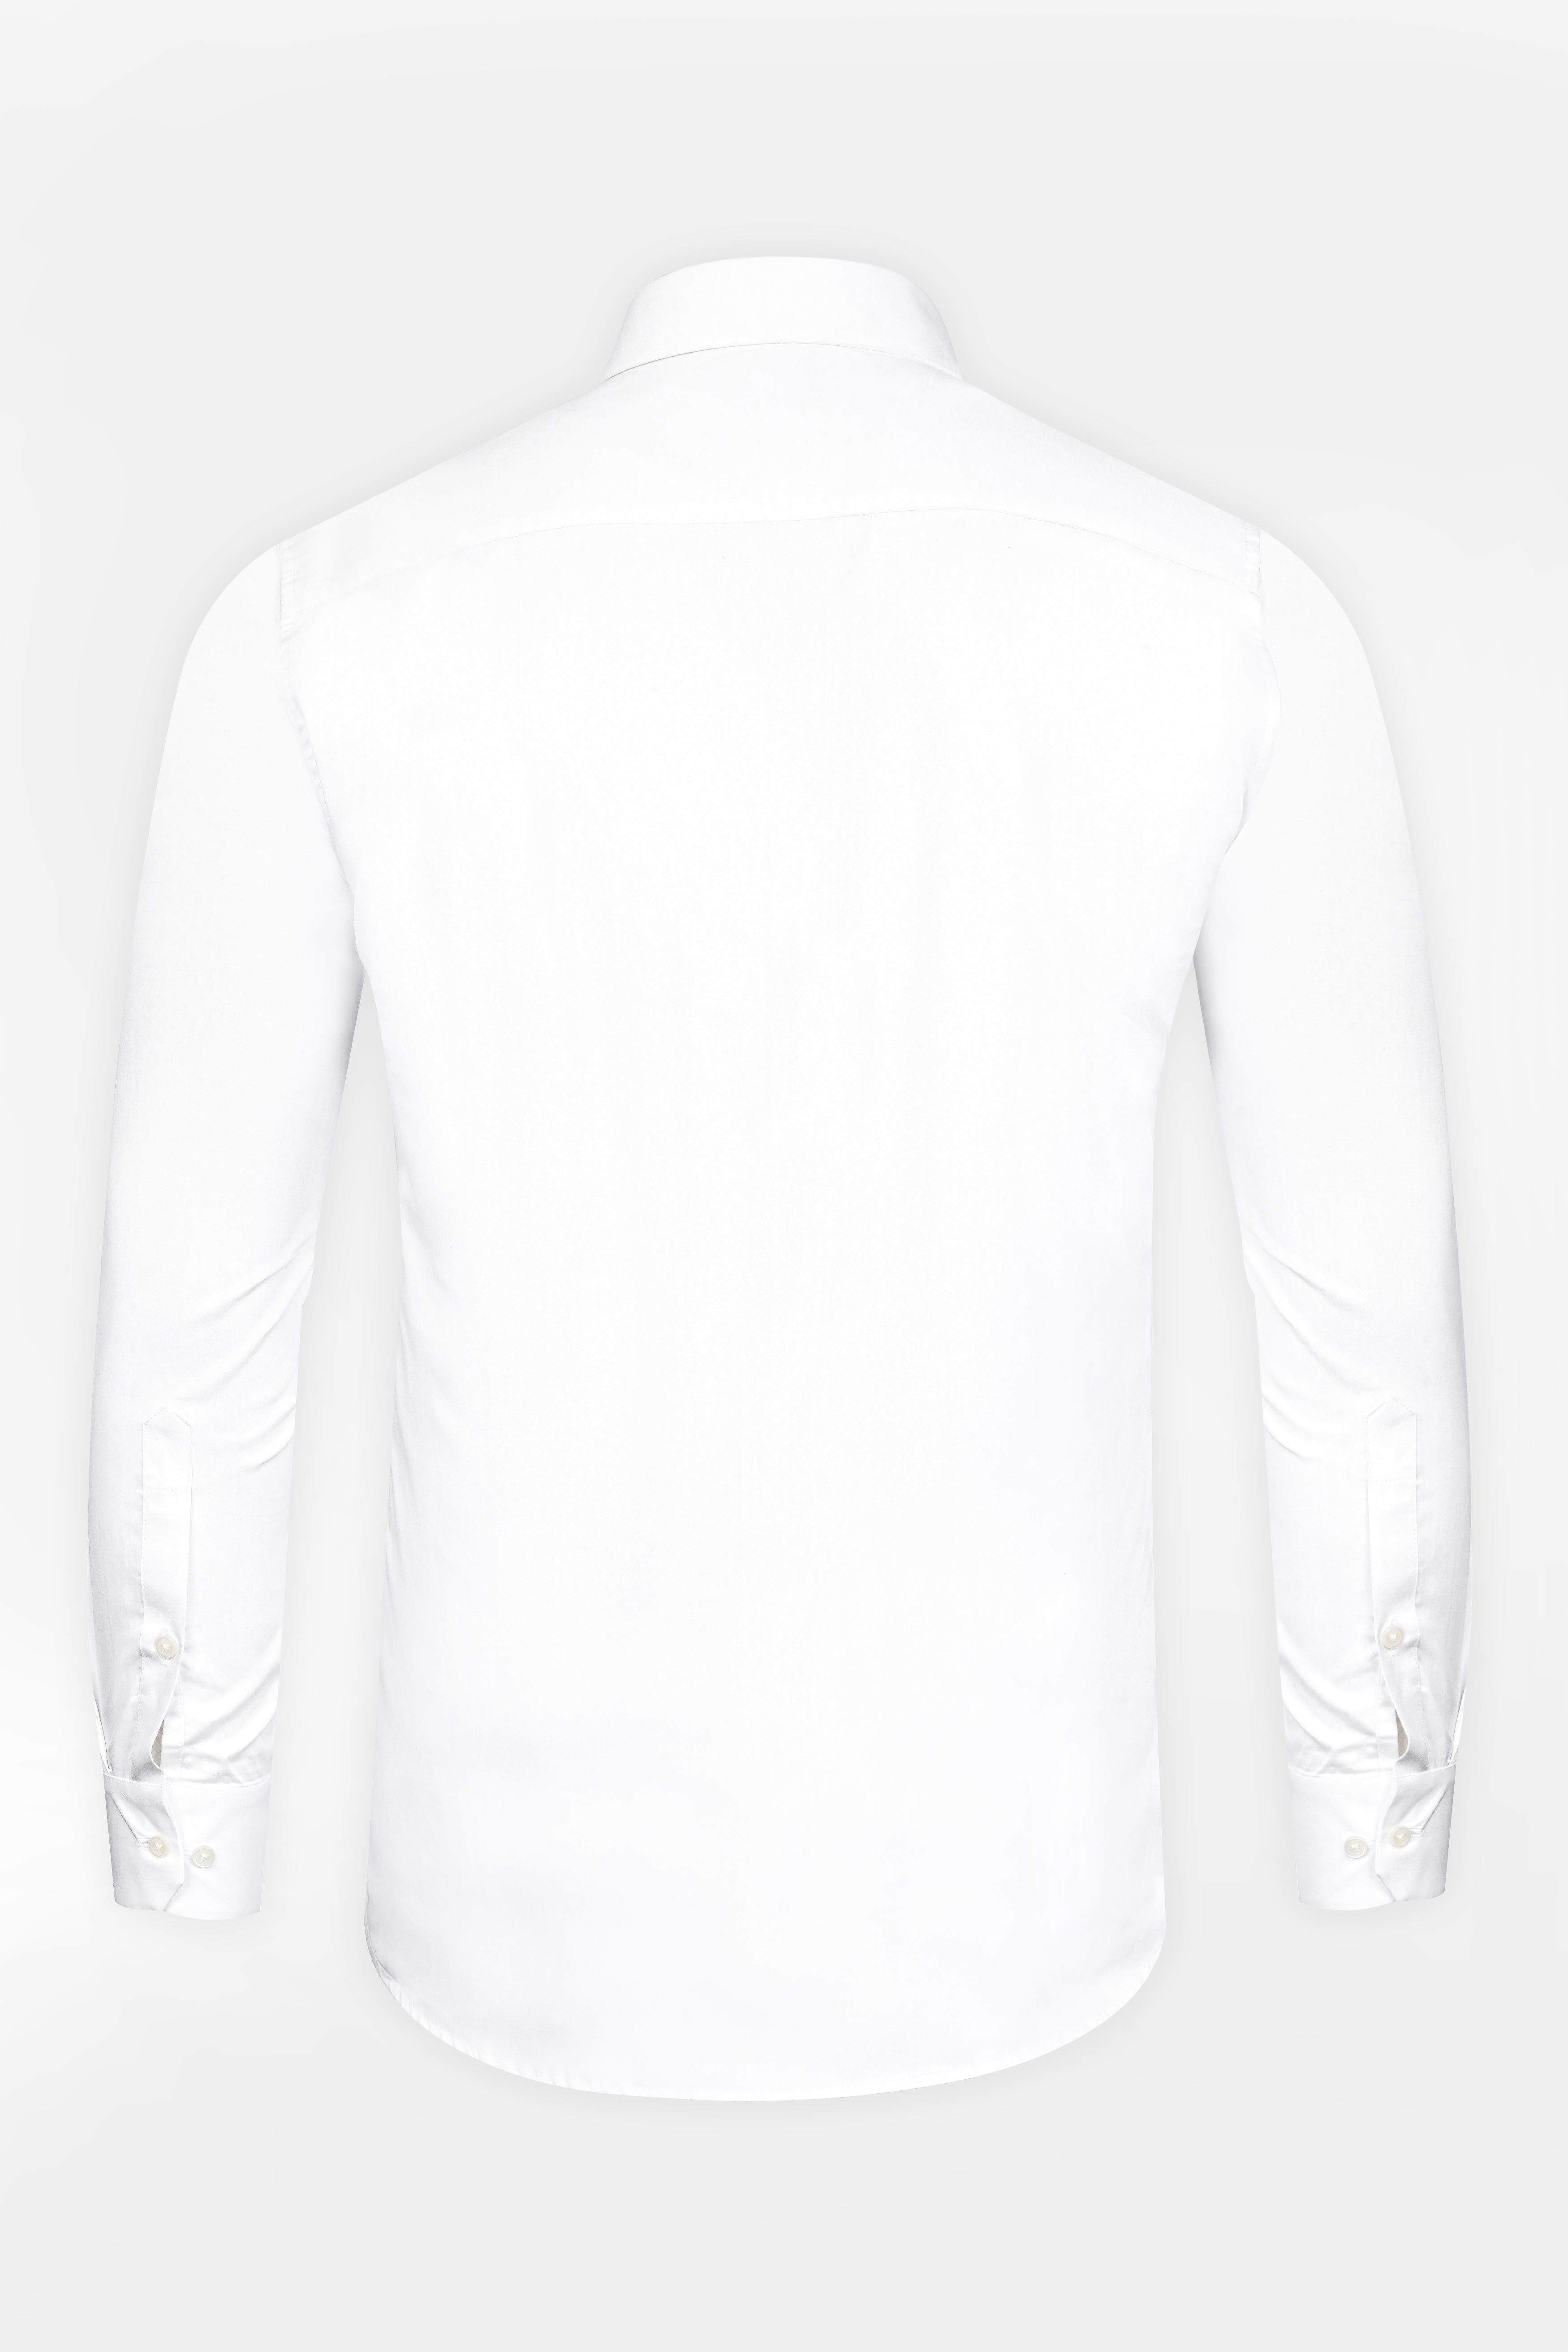 Bright White Lord Ganesha Printed Subtle Sheen Super Soft Premium Cotton Designer Shirt 11923-RPRT89-38, 11923-RPRT89-H-38, 11923-RPRT89-39, 11923-RPRT89-H-39, 11923-RPRT89-40, 11923-RPRT89-H-40, 11923-RPRT89-42, 11923-RPRT89-H-42, 11923-RPRT89-44, 11923-RPRT89-H-44, 11923-RPRT89-46, 11923-RPRT89-H-46, 11923-RPRT89-48, 11923-RPRT89-H-48, 11923-RPRT89-50, 11923-RPRT89-H-50, 11923-RPRT89-52, 11923-RPRT89-H-52